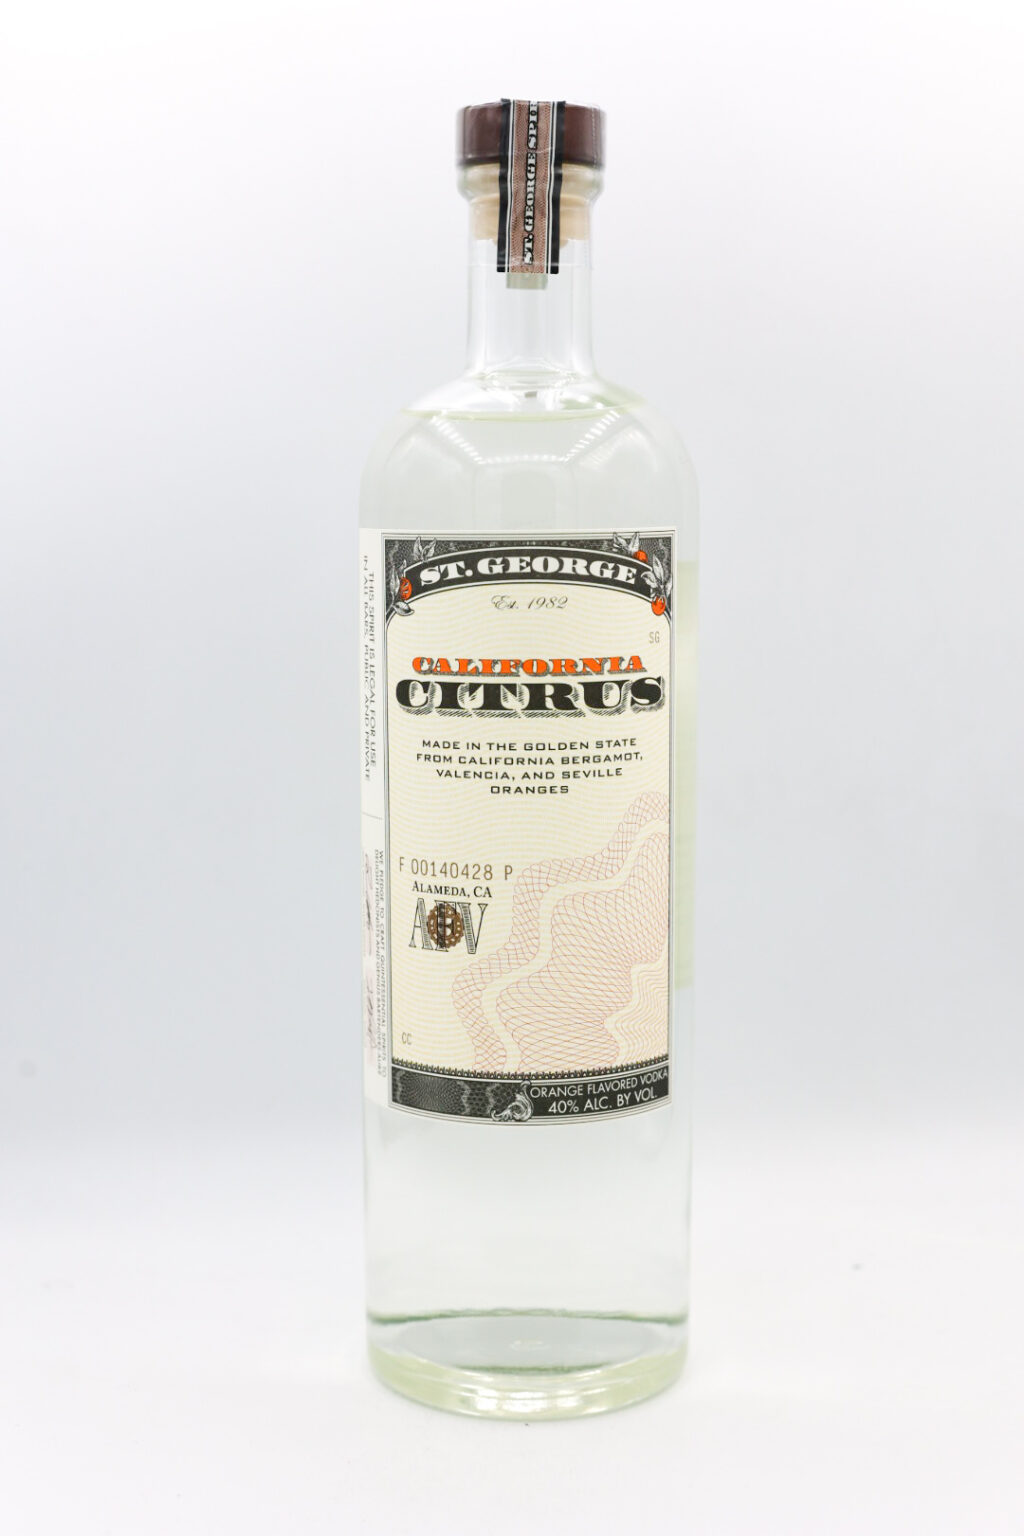 St George Citrus Vodka